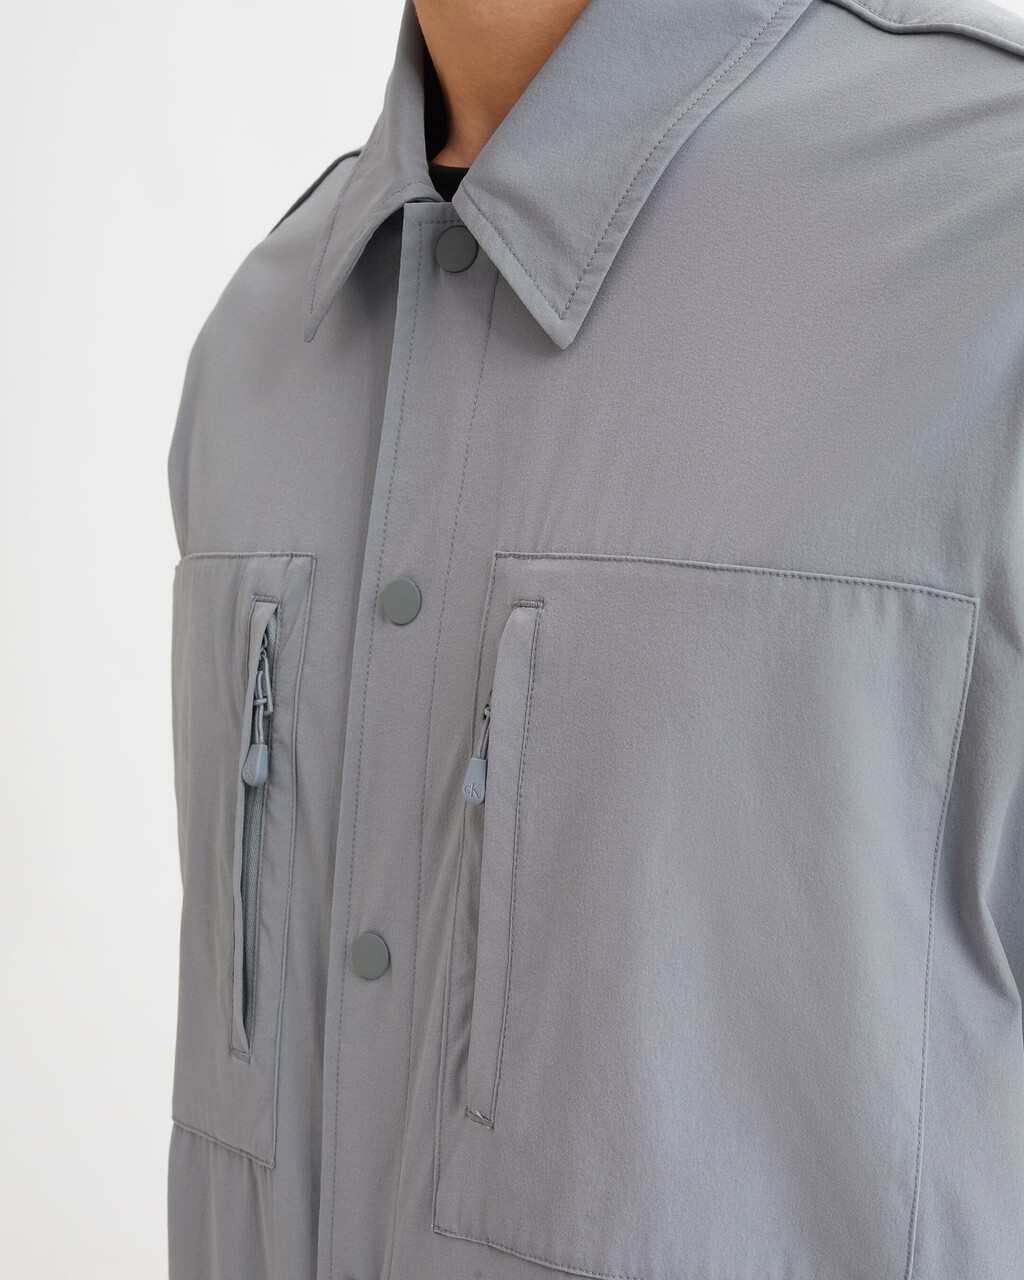 PREMIUM ESSENTIALS 裇衫款外套, Overcast Grey, hi-res